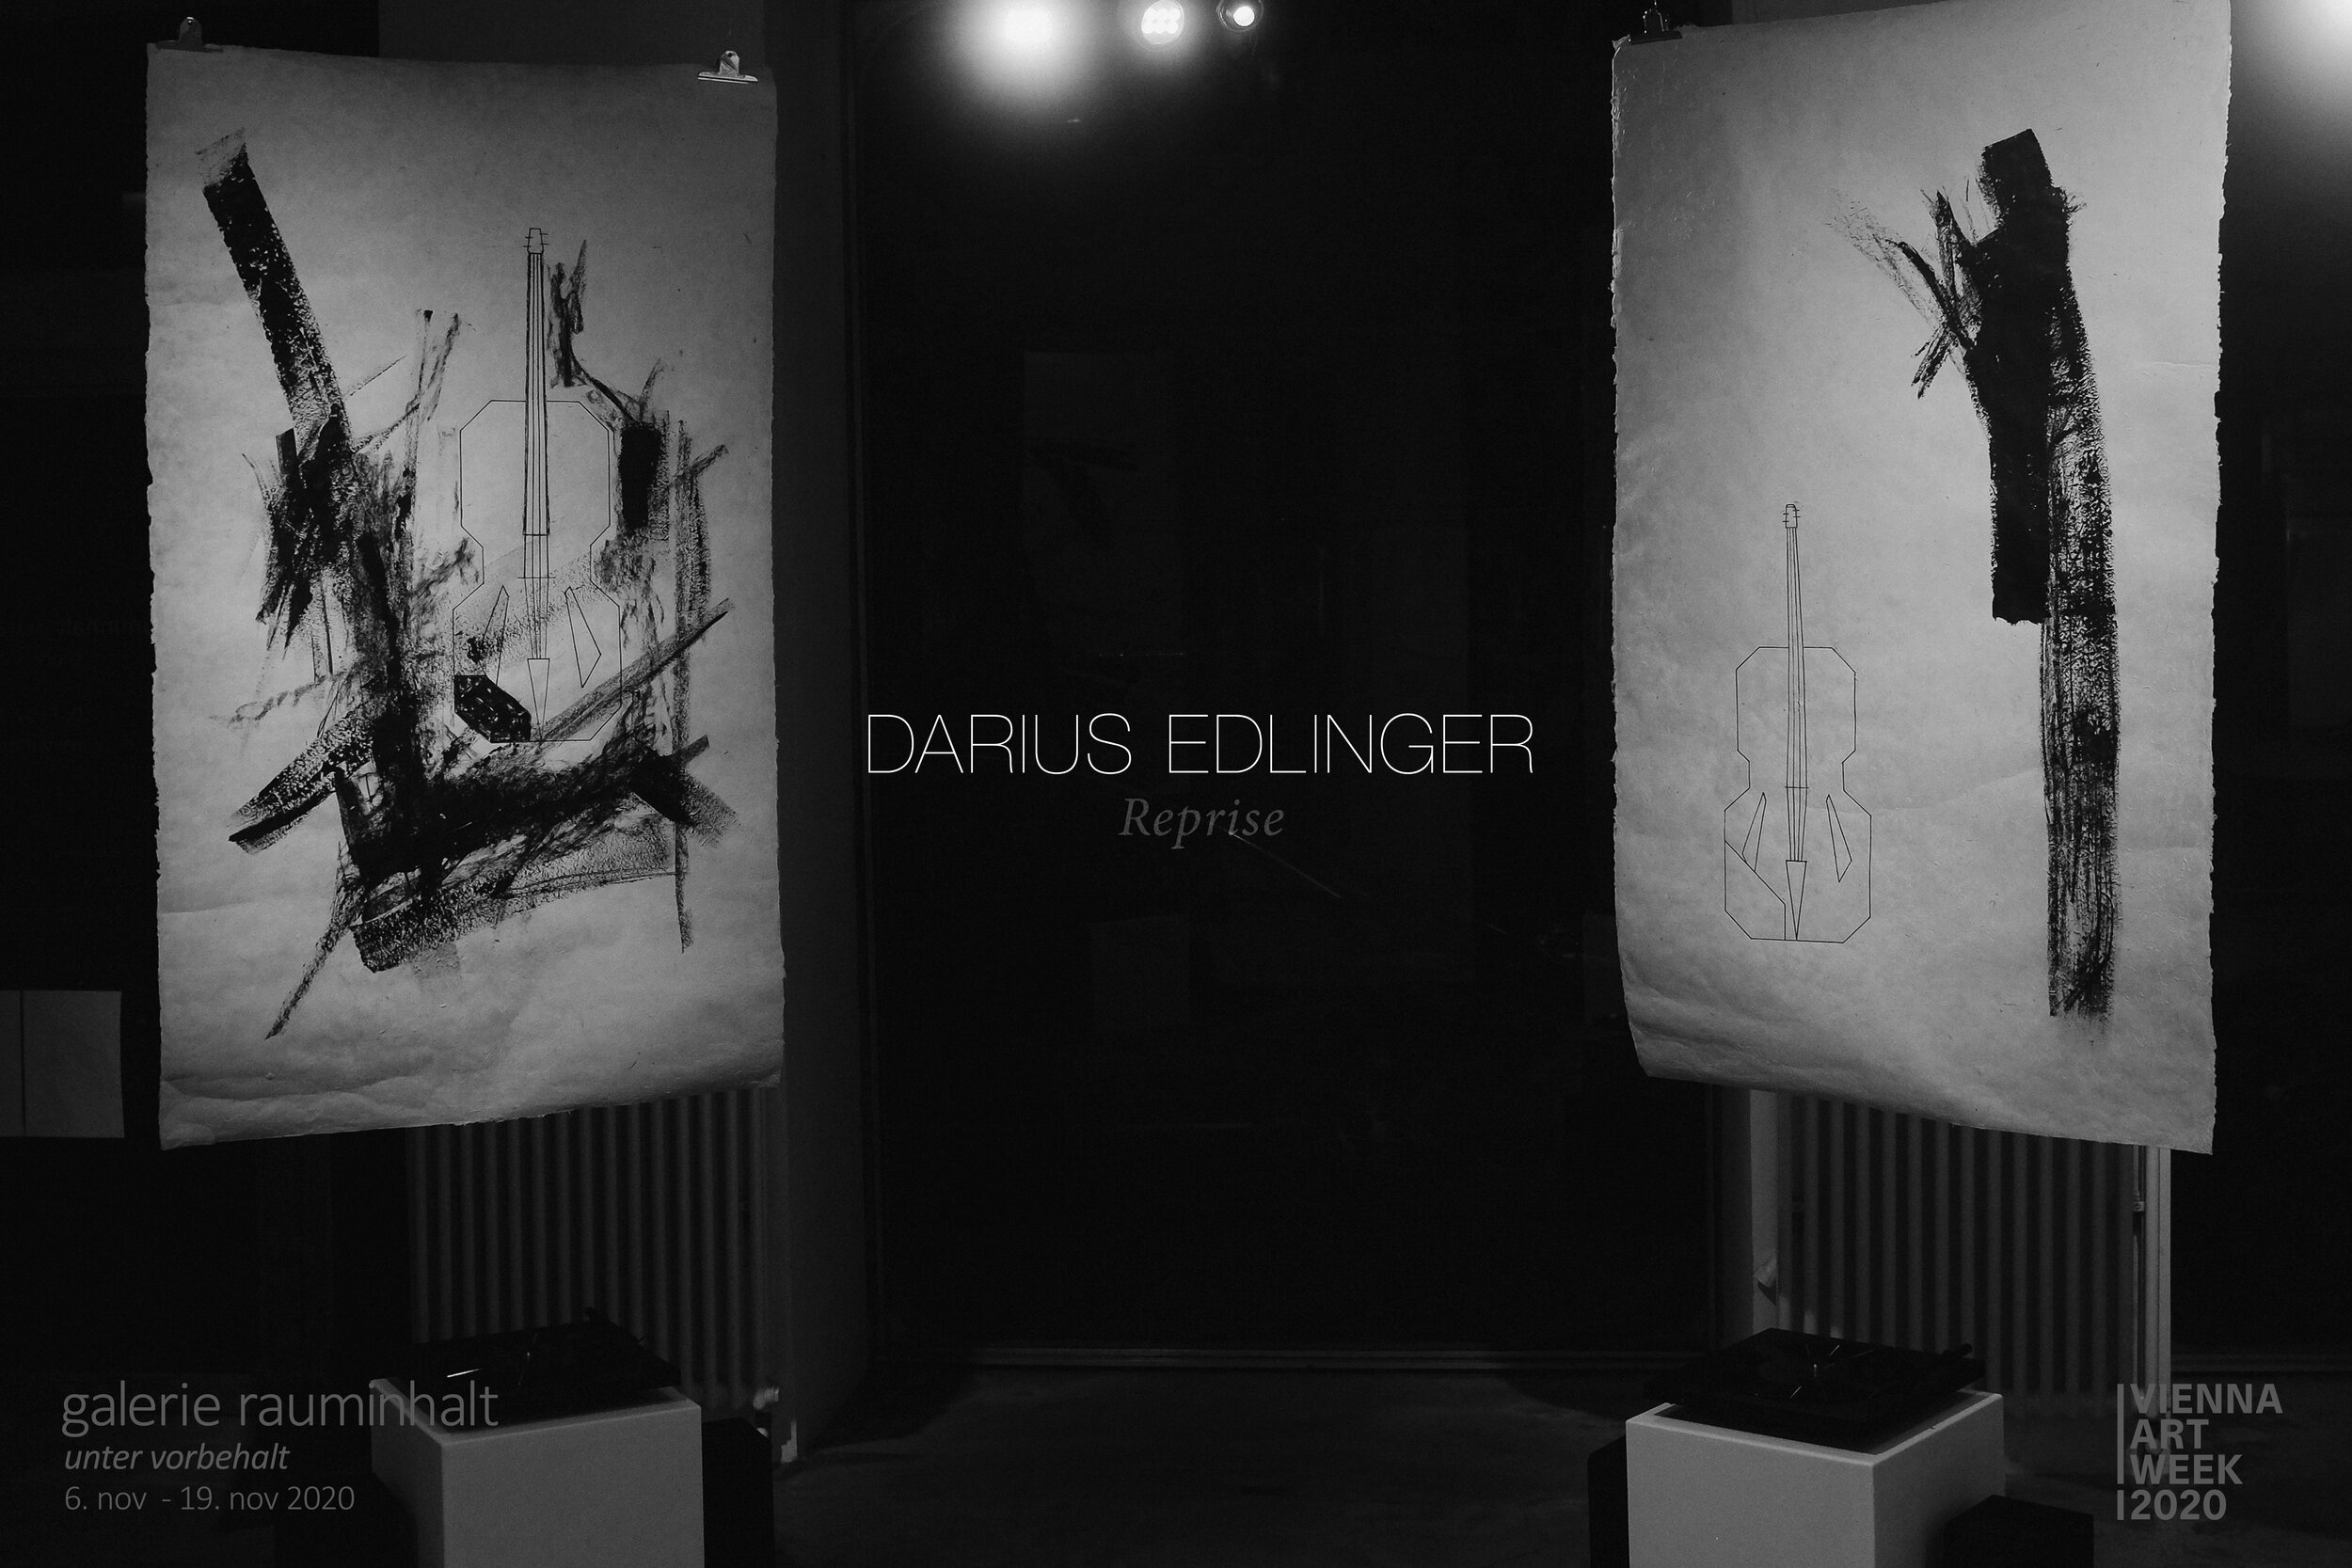 Darius Edlinger Reprise - Galerie Rauminhalt - Vienna Art Week 7